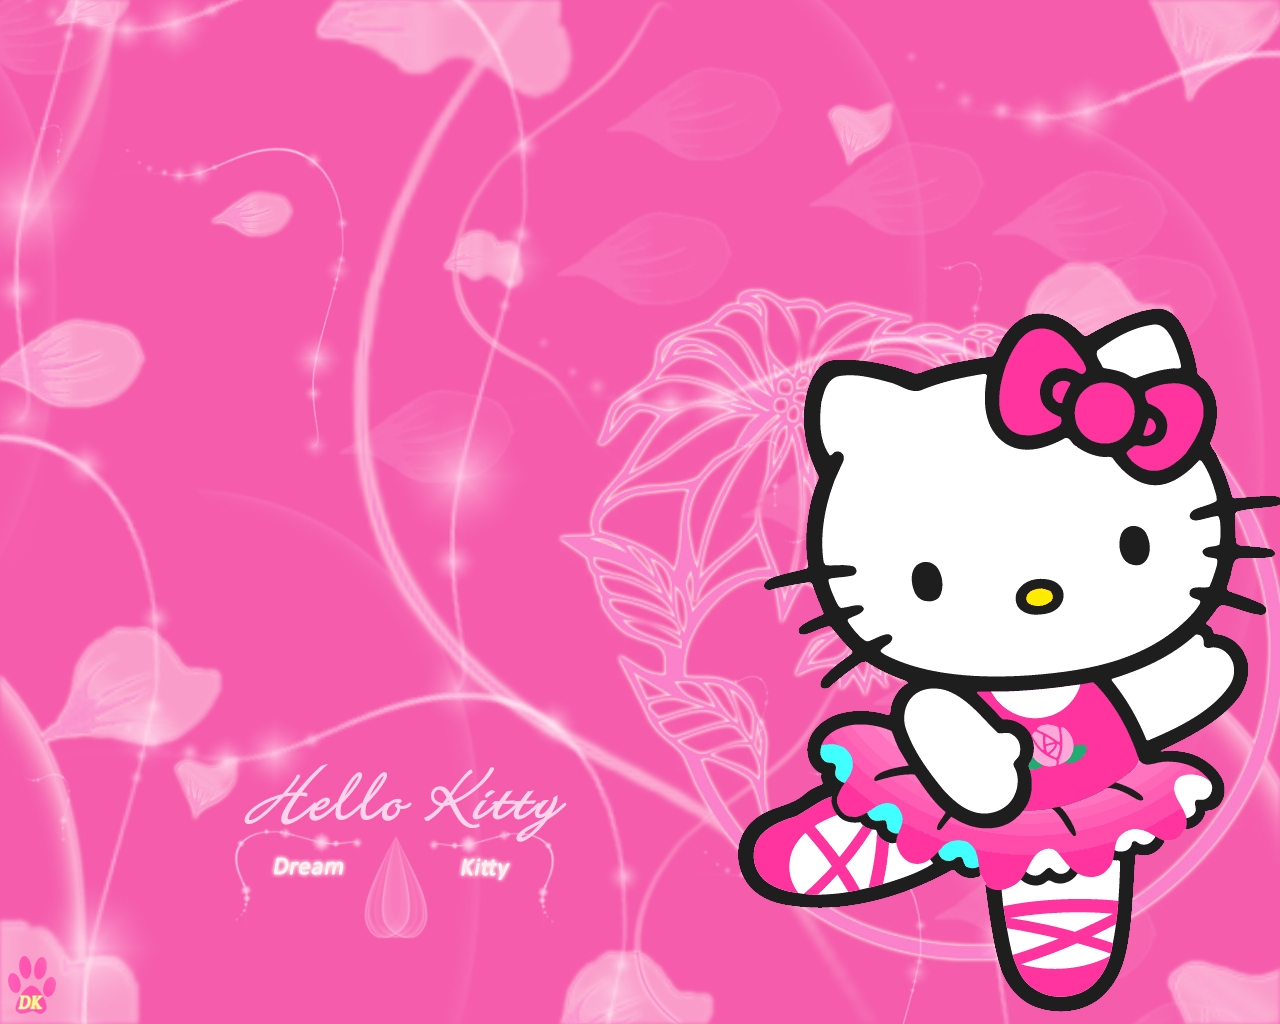 Hello Kitty Wallpaper 1280x1024 Hello Kitty Dream Kitty